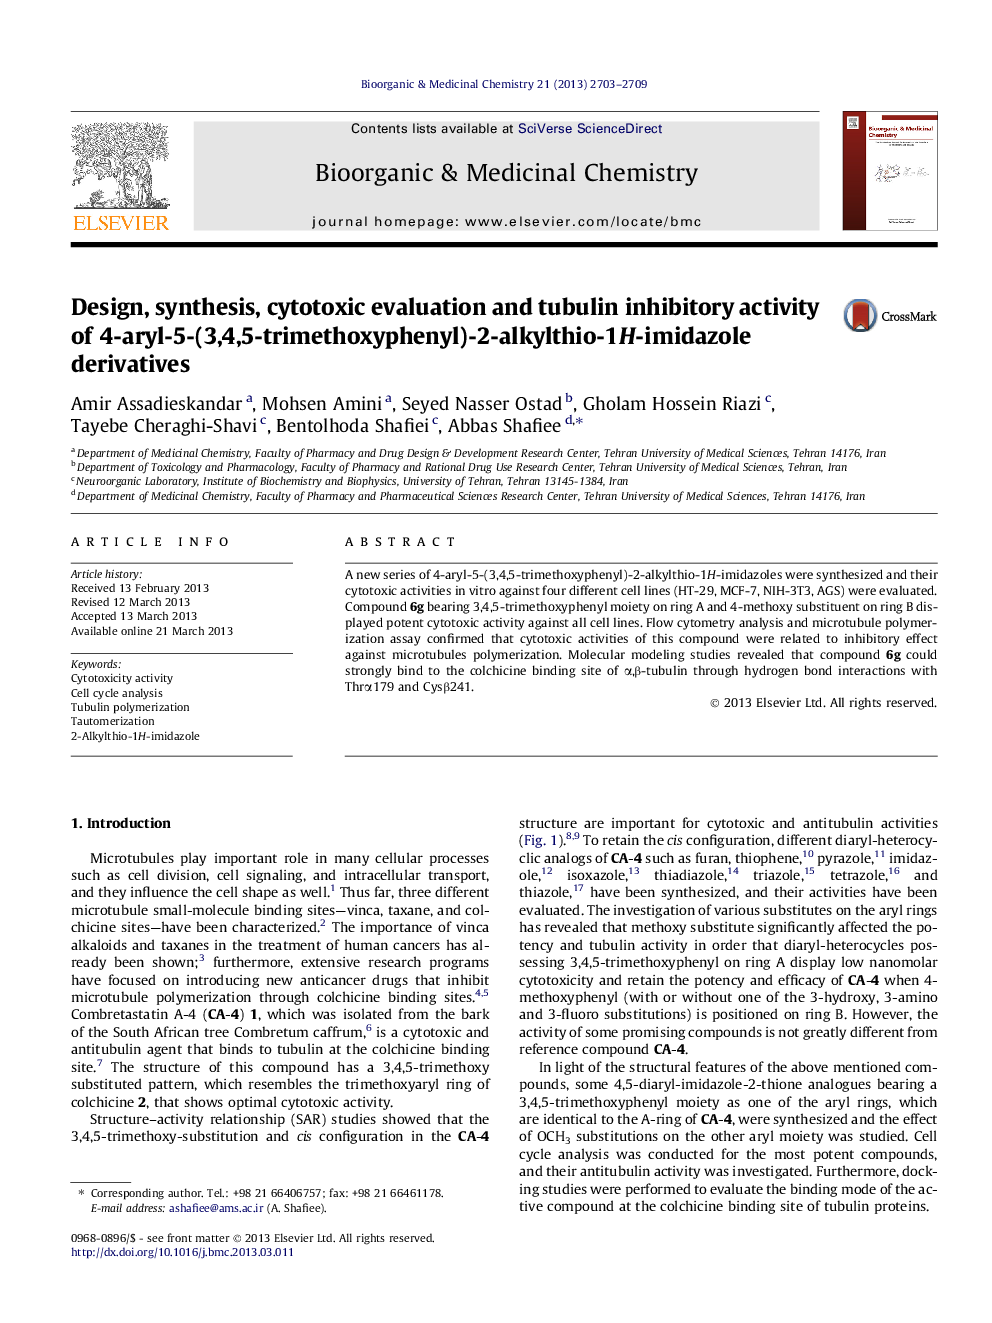 Design, synthesis, cytotoxic evaluation and tubulin inhibitory activity of 4-aryl-5-(3,4,5-trimethoxyphenyl)-2-alkylthio-1H-imidazole derivatives